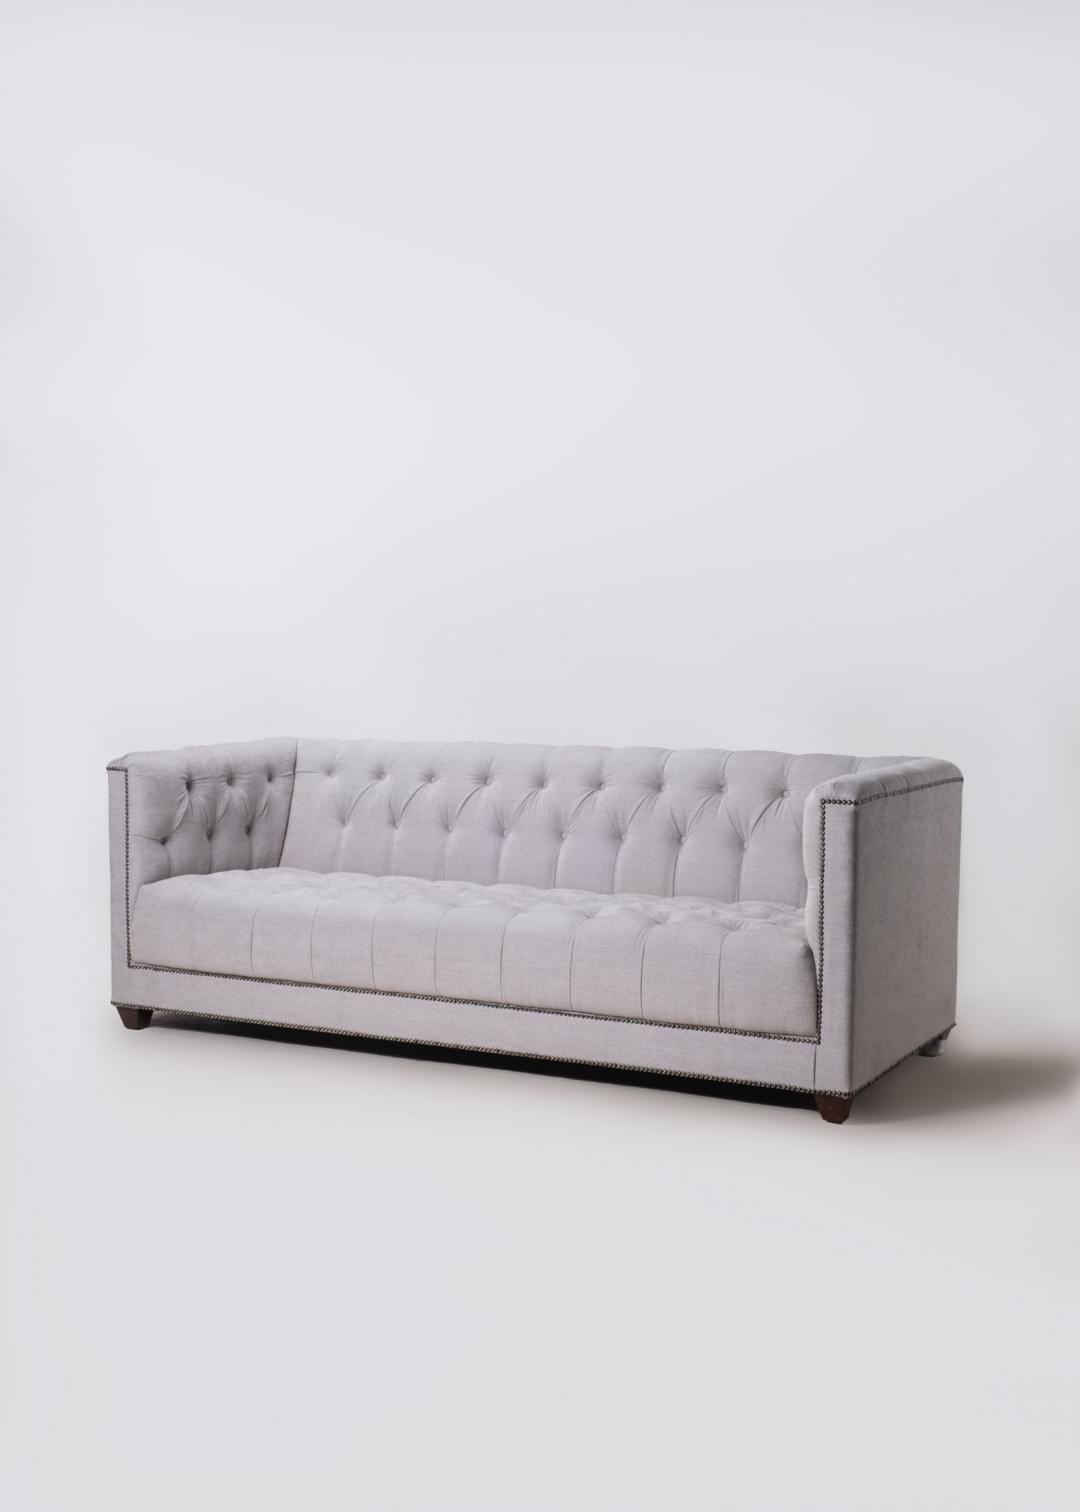 RACHLIN SOFA from Lifetime Design Furniture